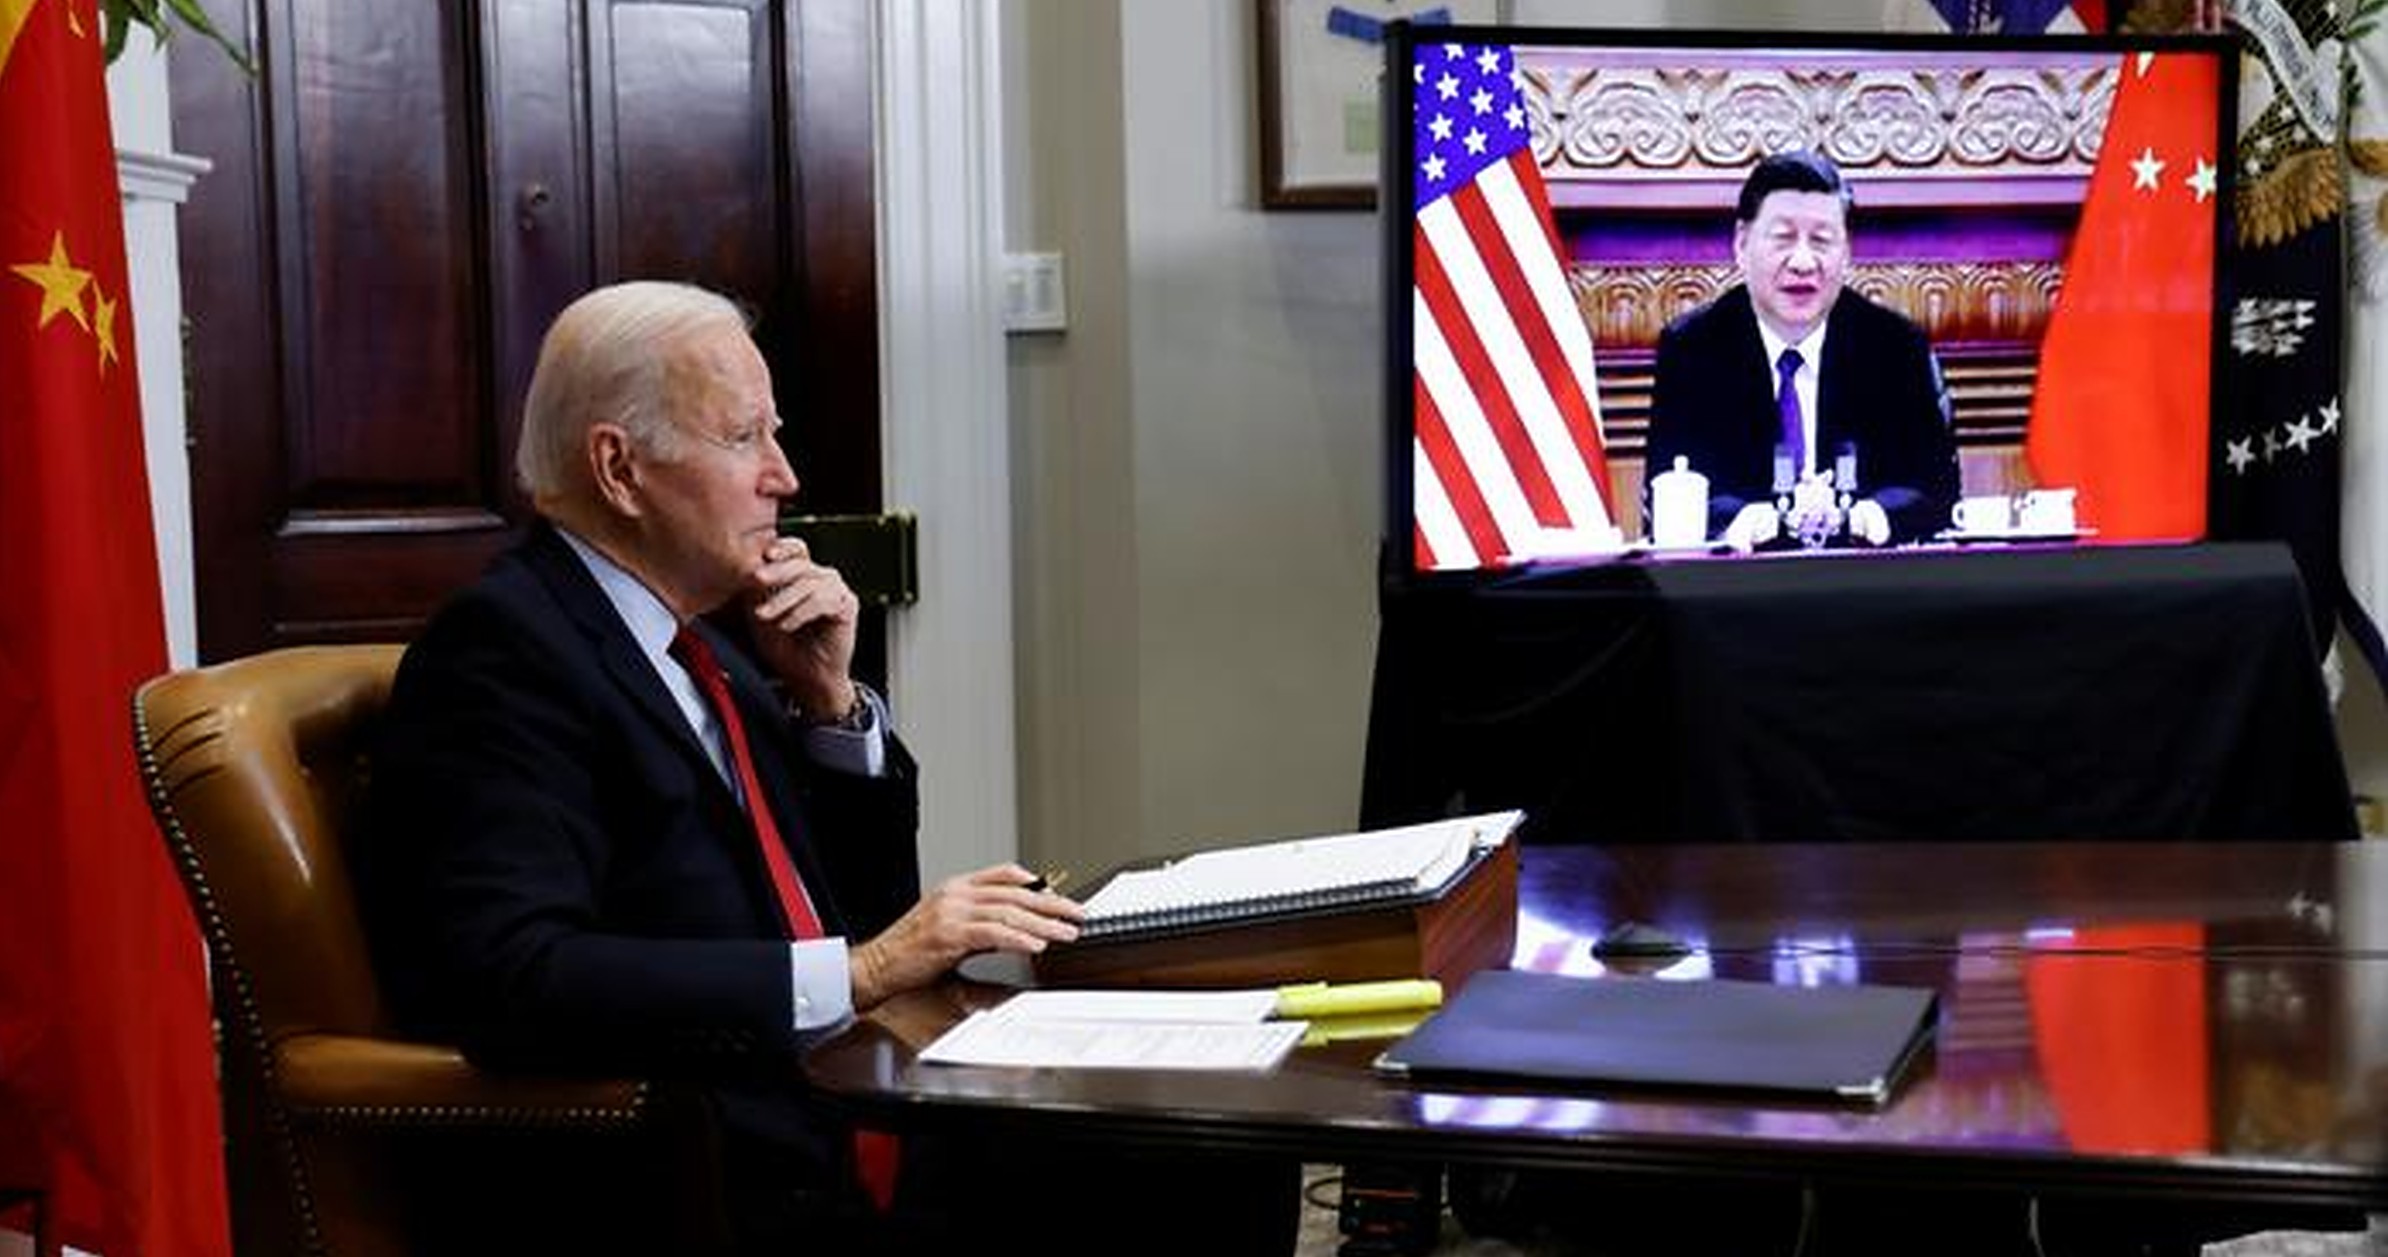 Joe Biden și Xi Jinping